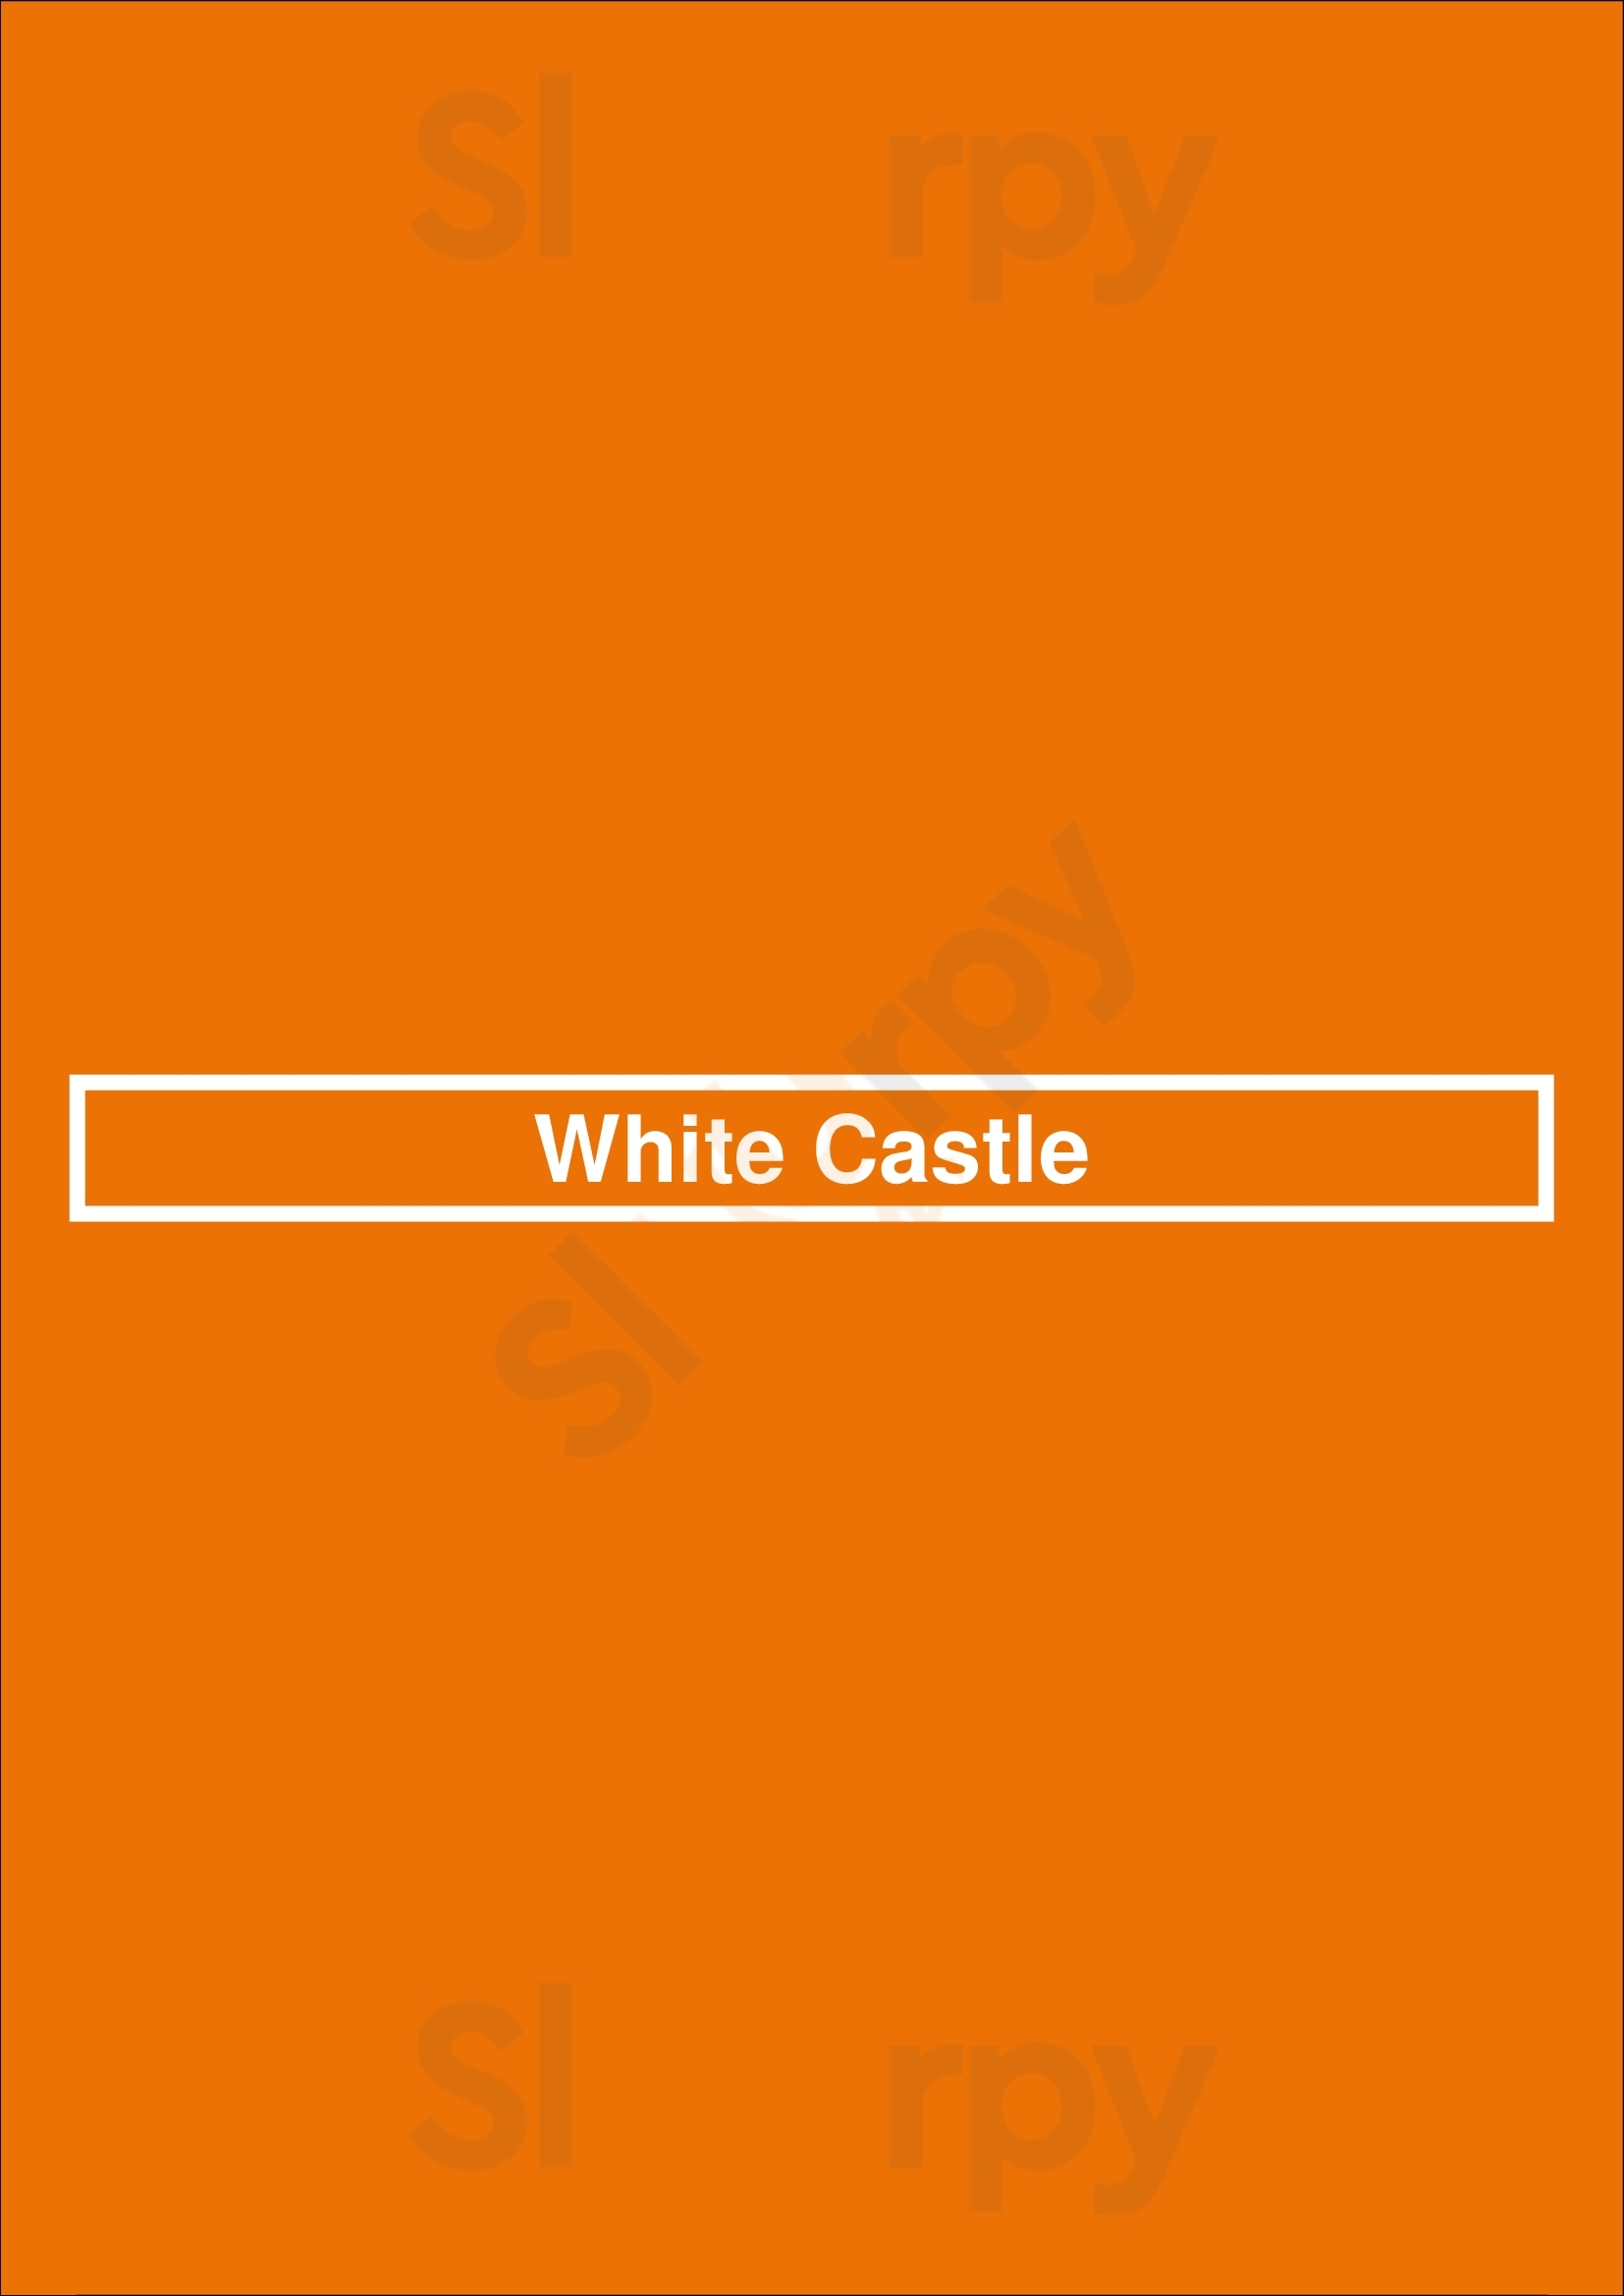 White Castle Milford Menu - 1